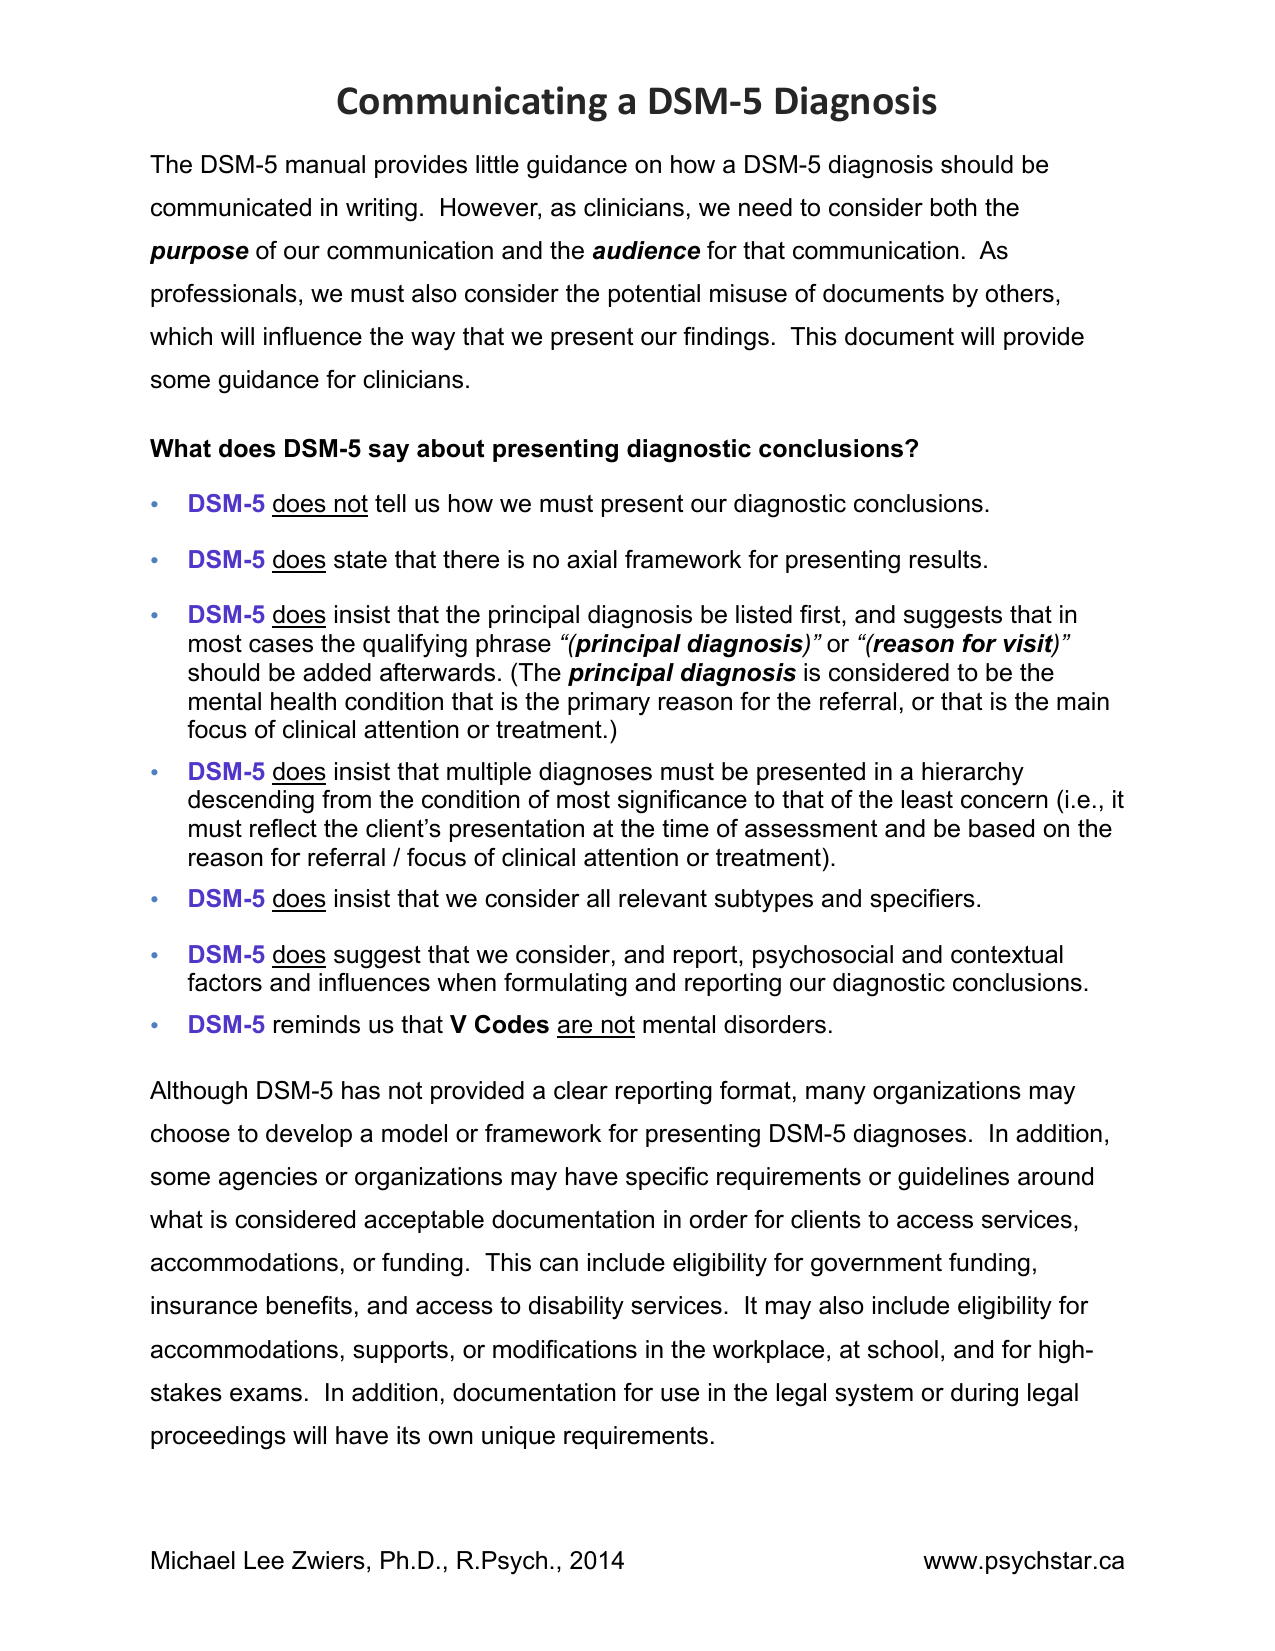 Writing a DSM-20 Diagnosis